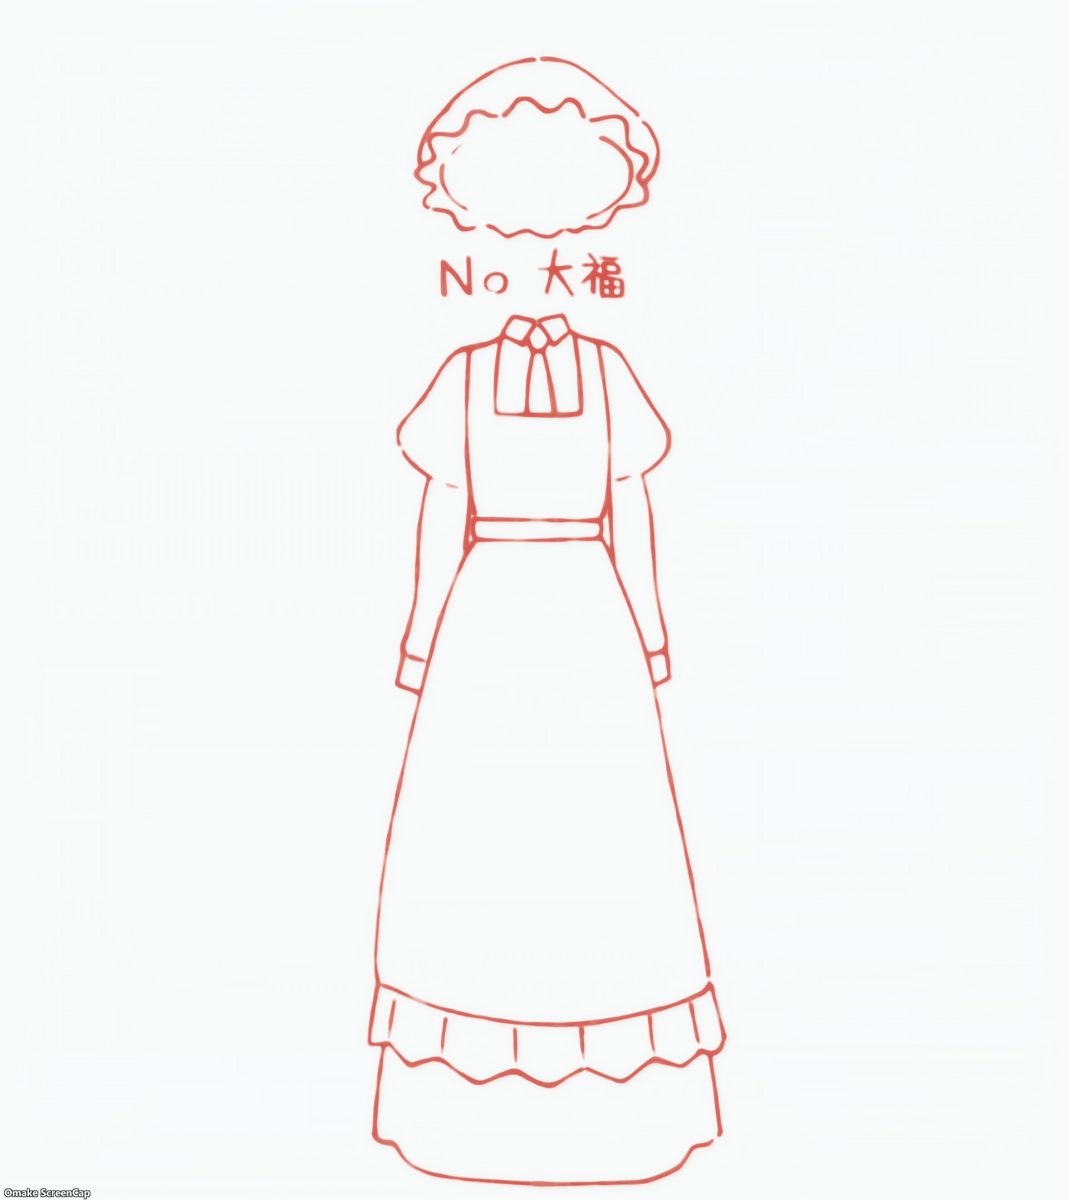 Miss Kobayashi's Dragon Maid S Episode 3 Georgie's No Daifuku Maid Outfit